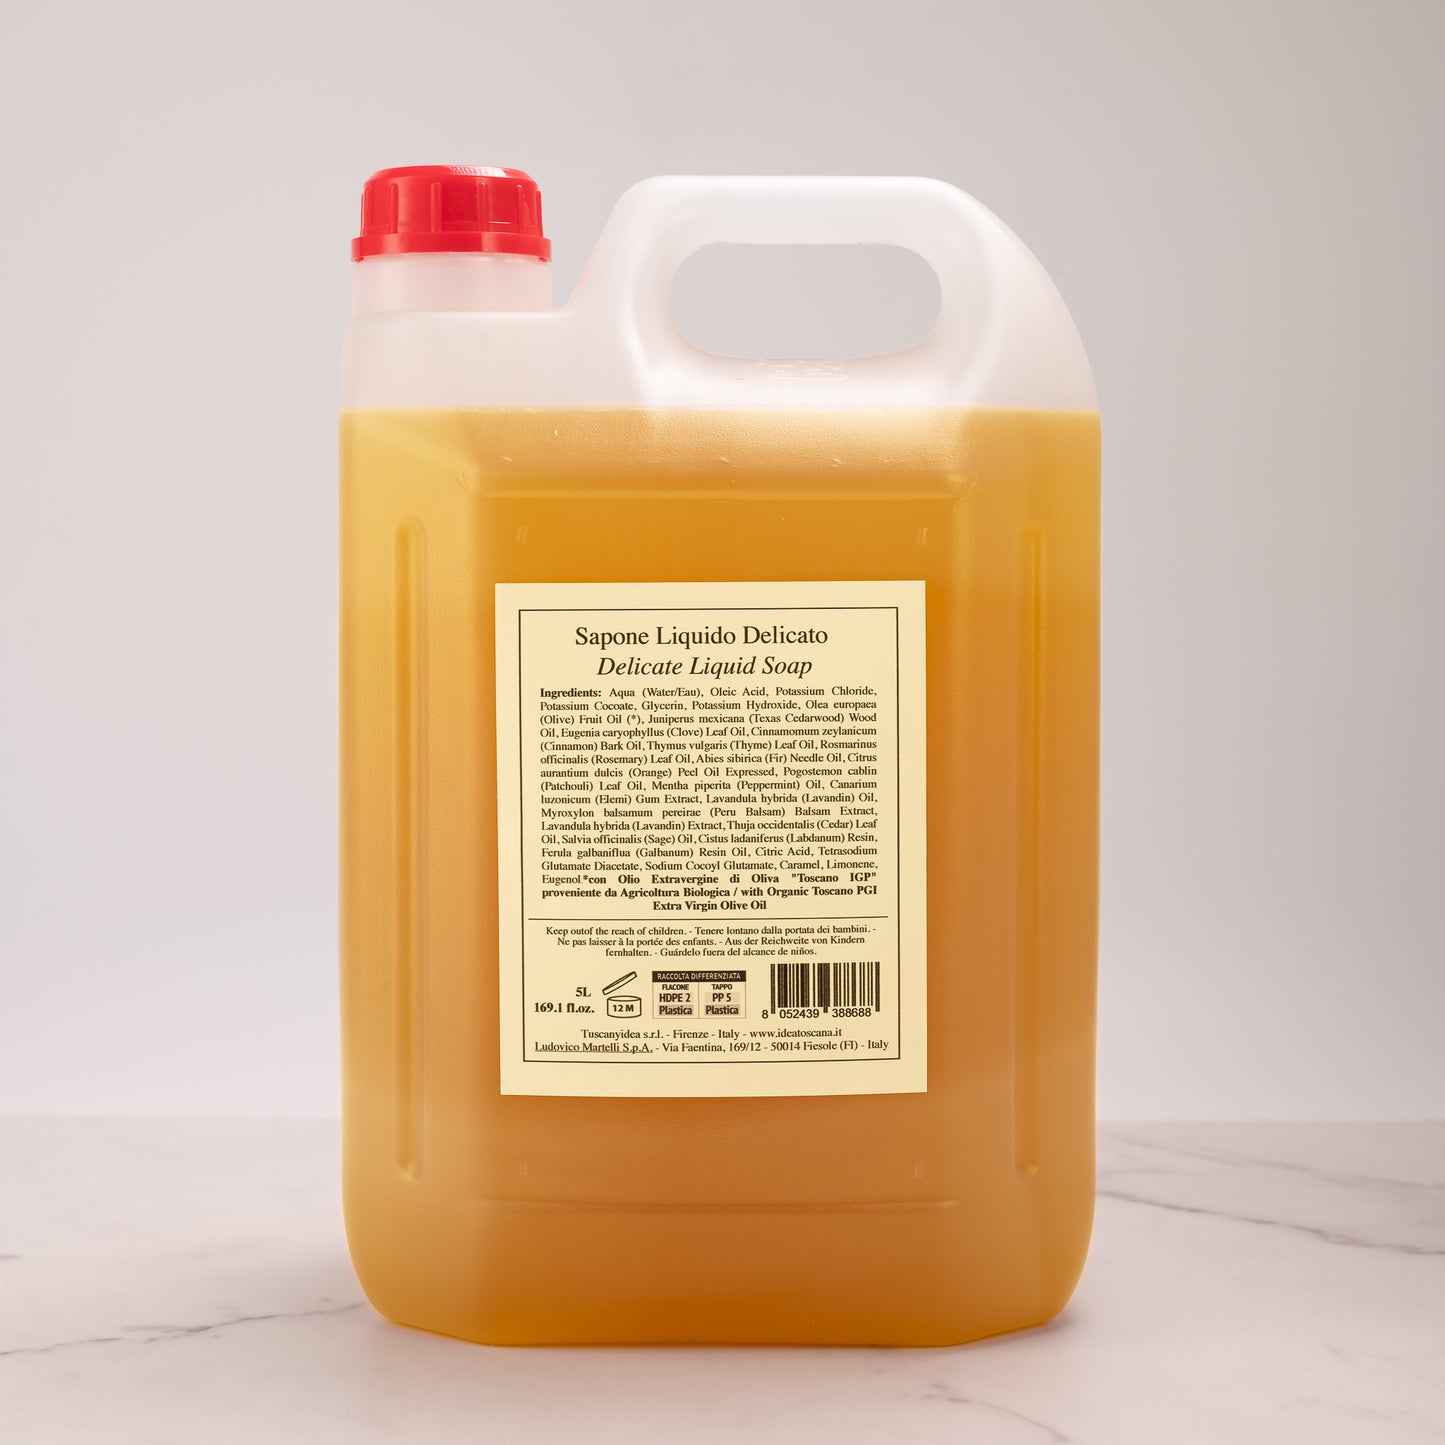 Prima Spremitura Liquid Soap Refill 5L - Idea Toscana